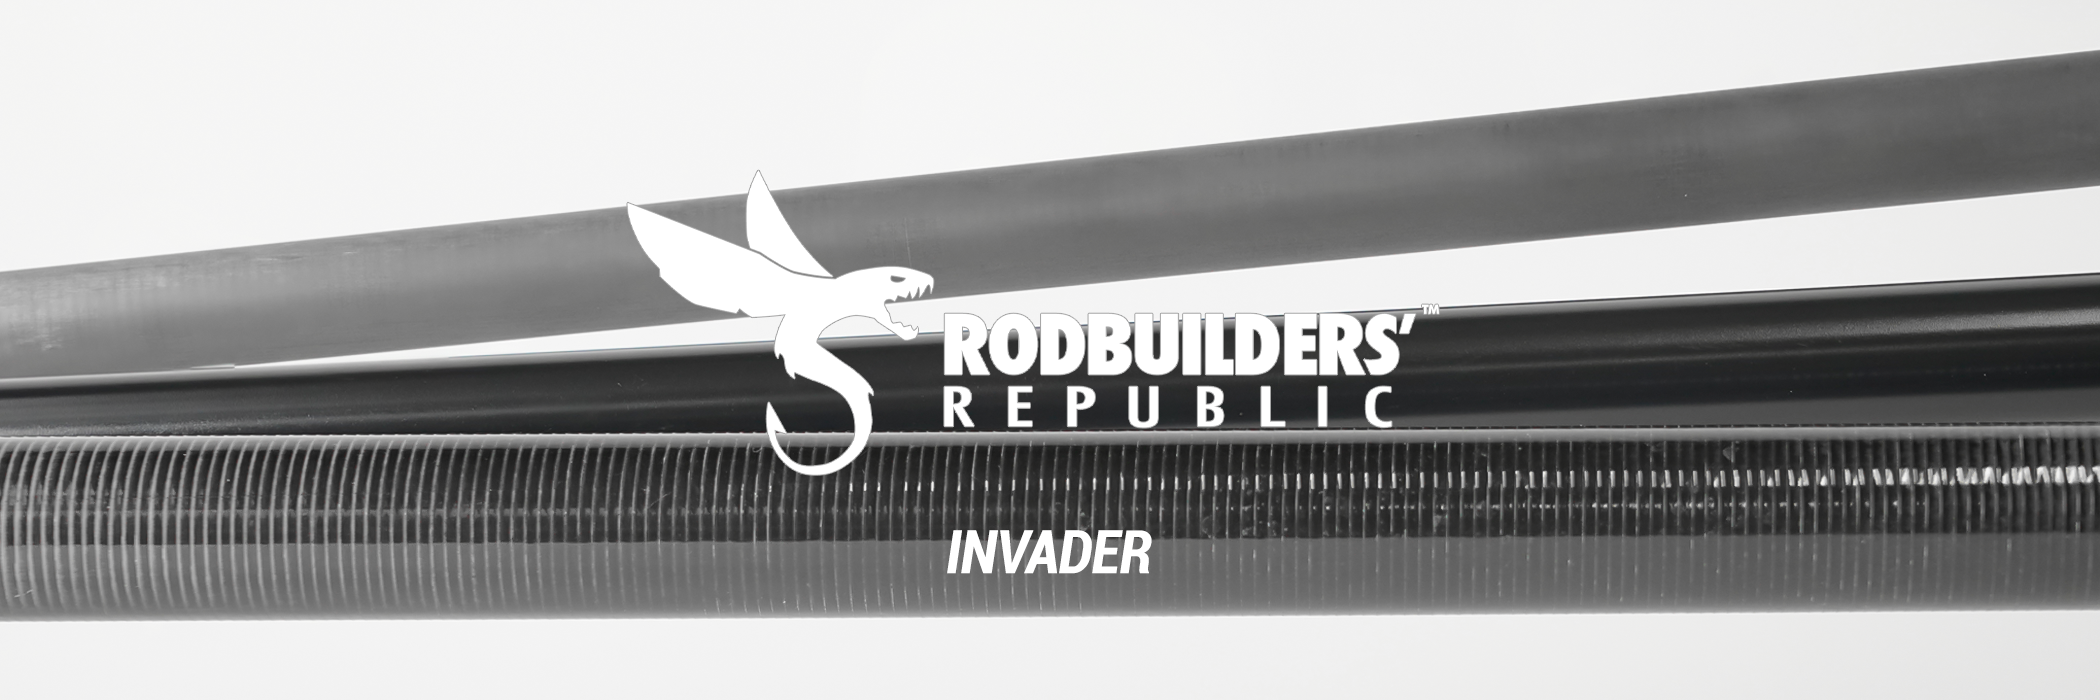 Rodbuilders' Republic - Invader